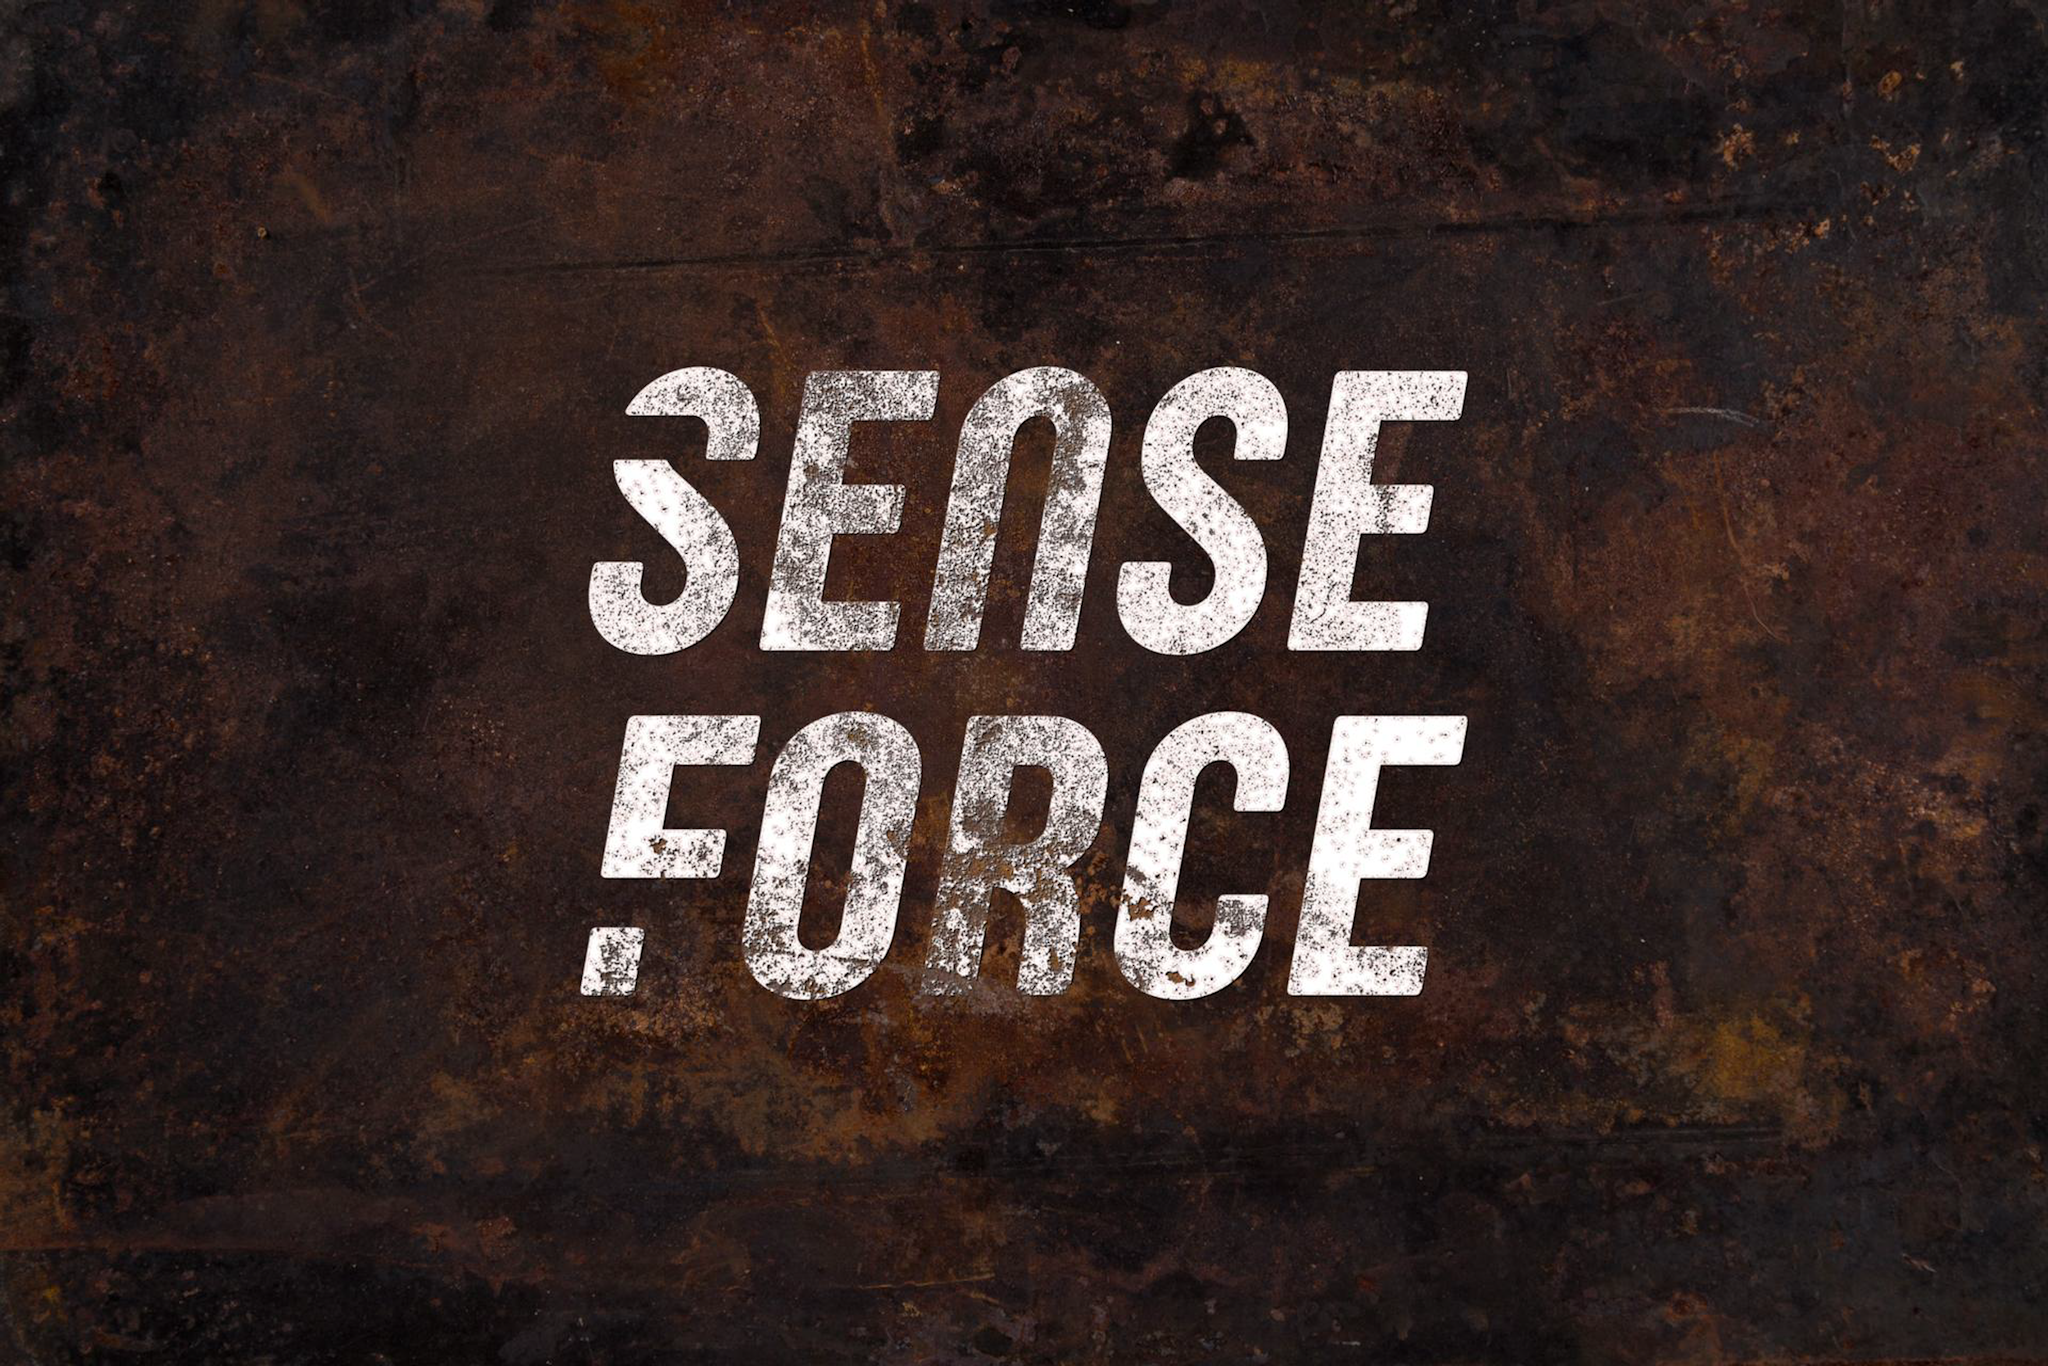 Senseforce Logo Rust Visual © Zeughaus Design